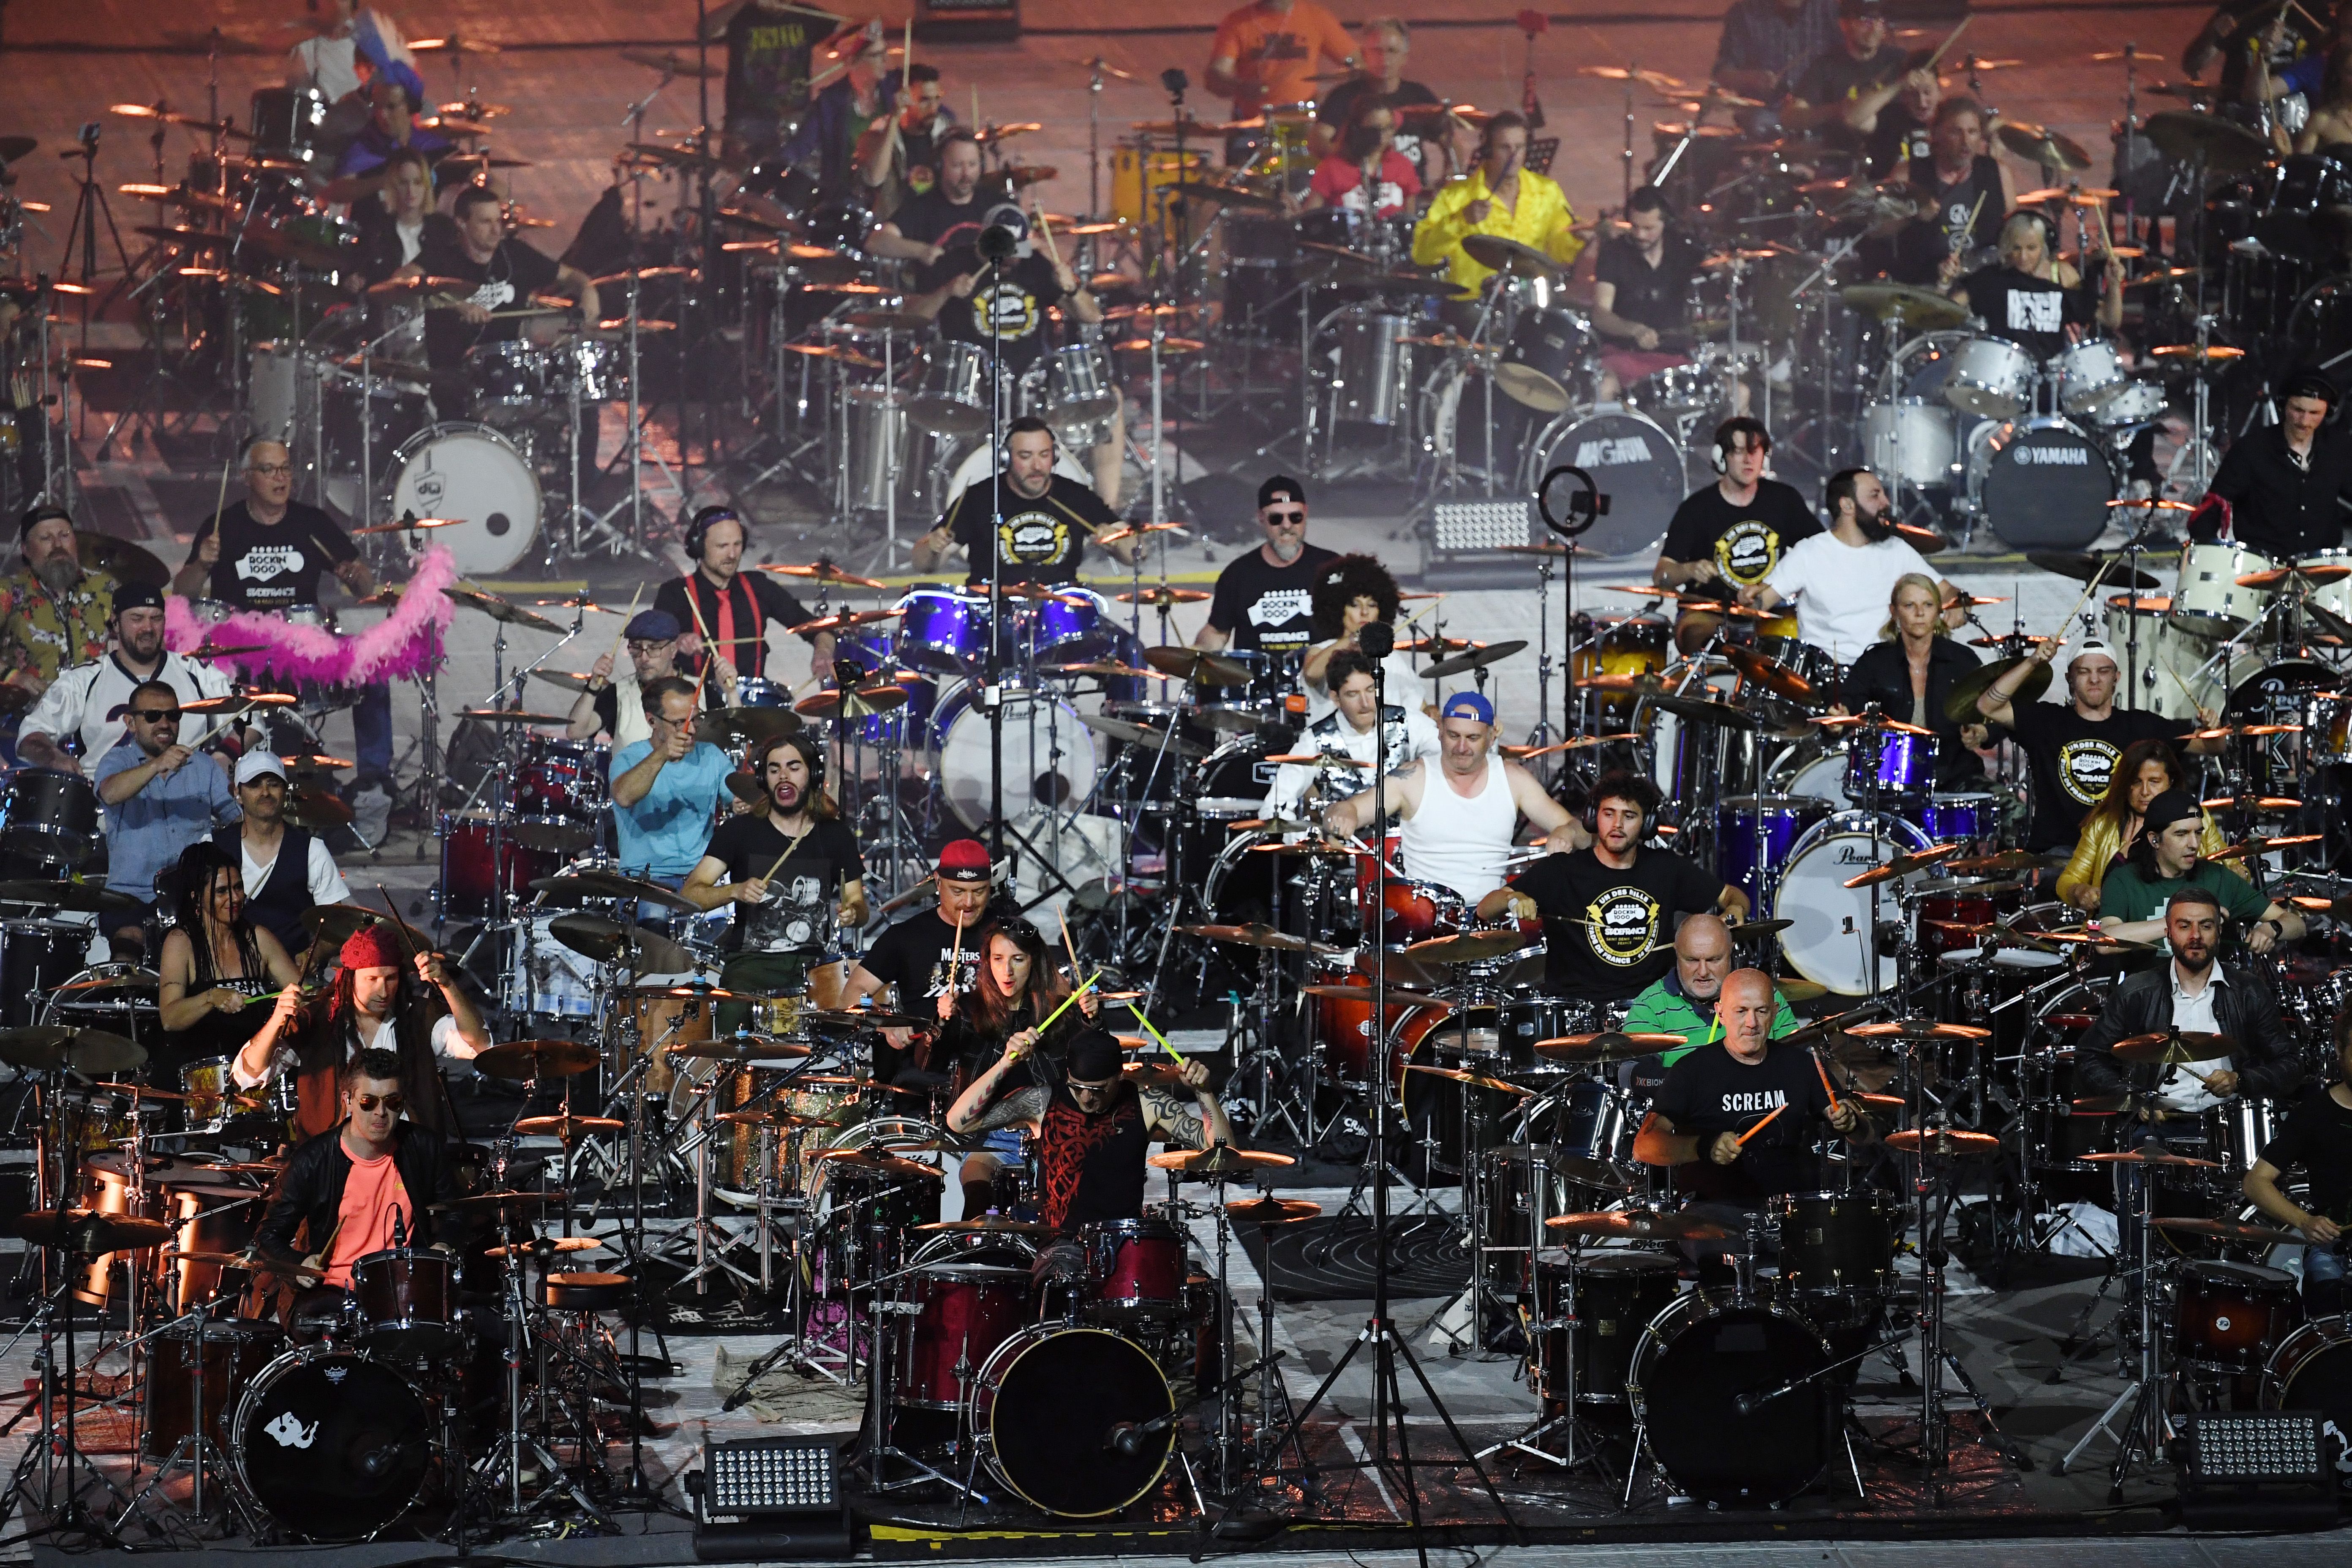 Drummers.